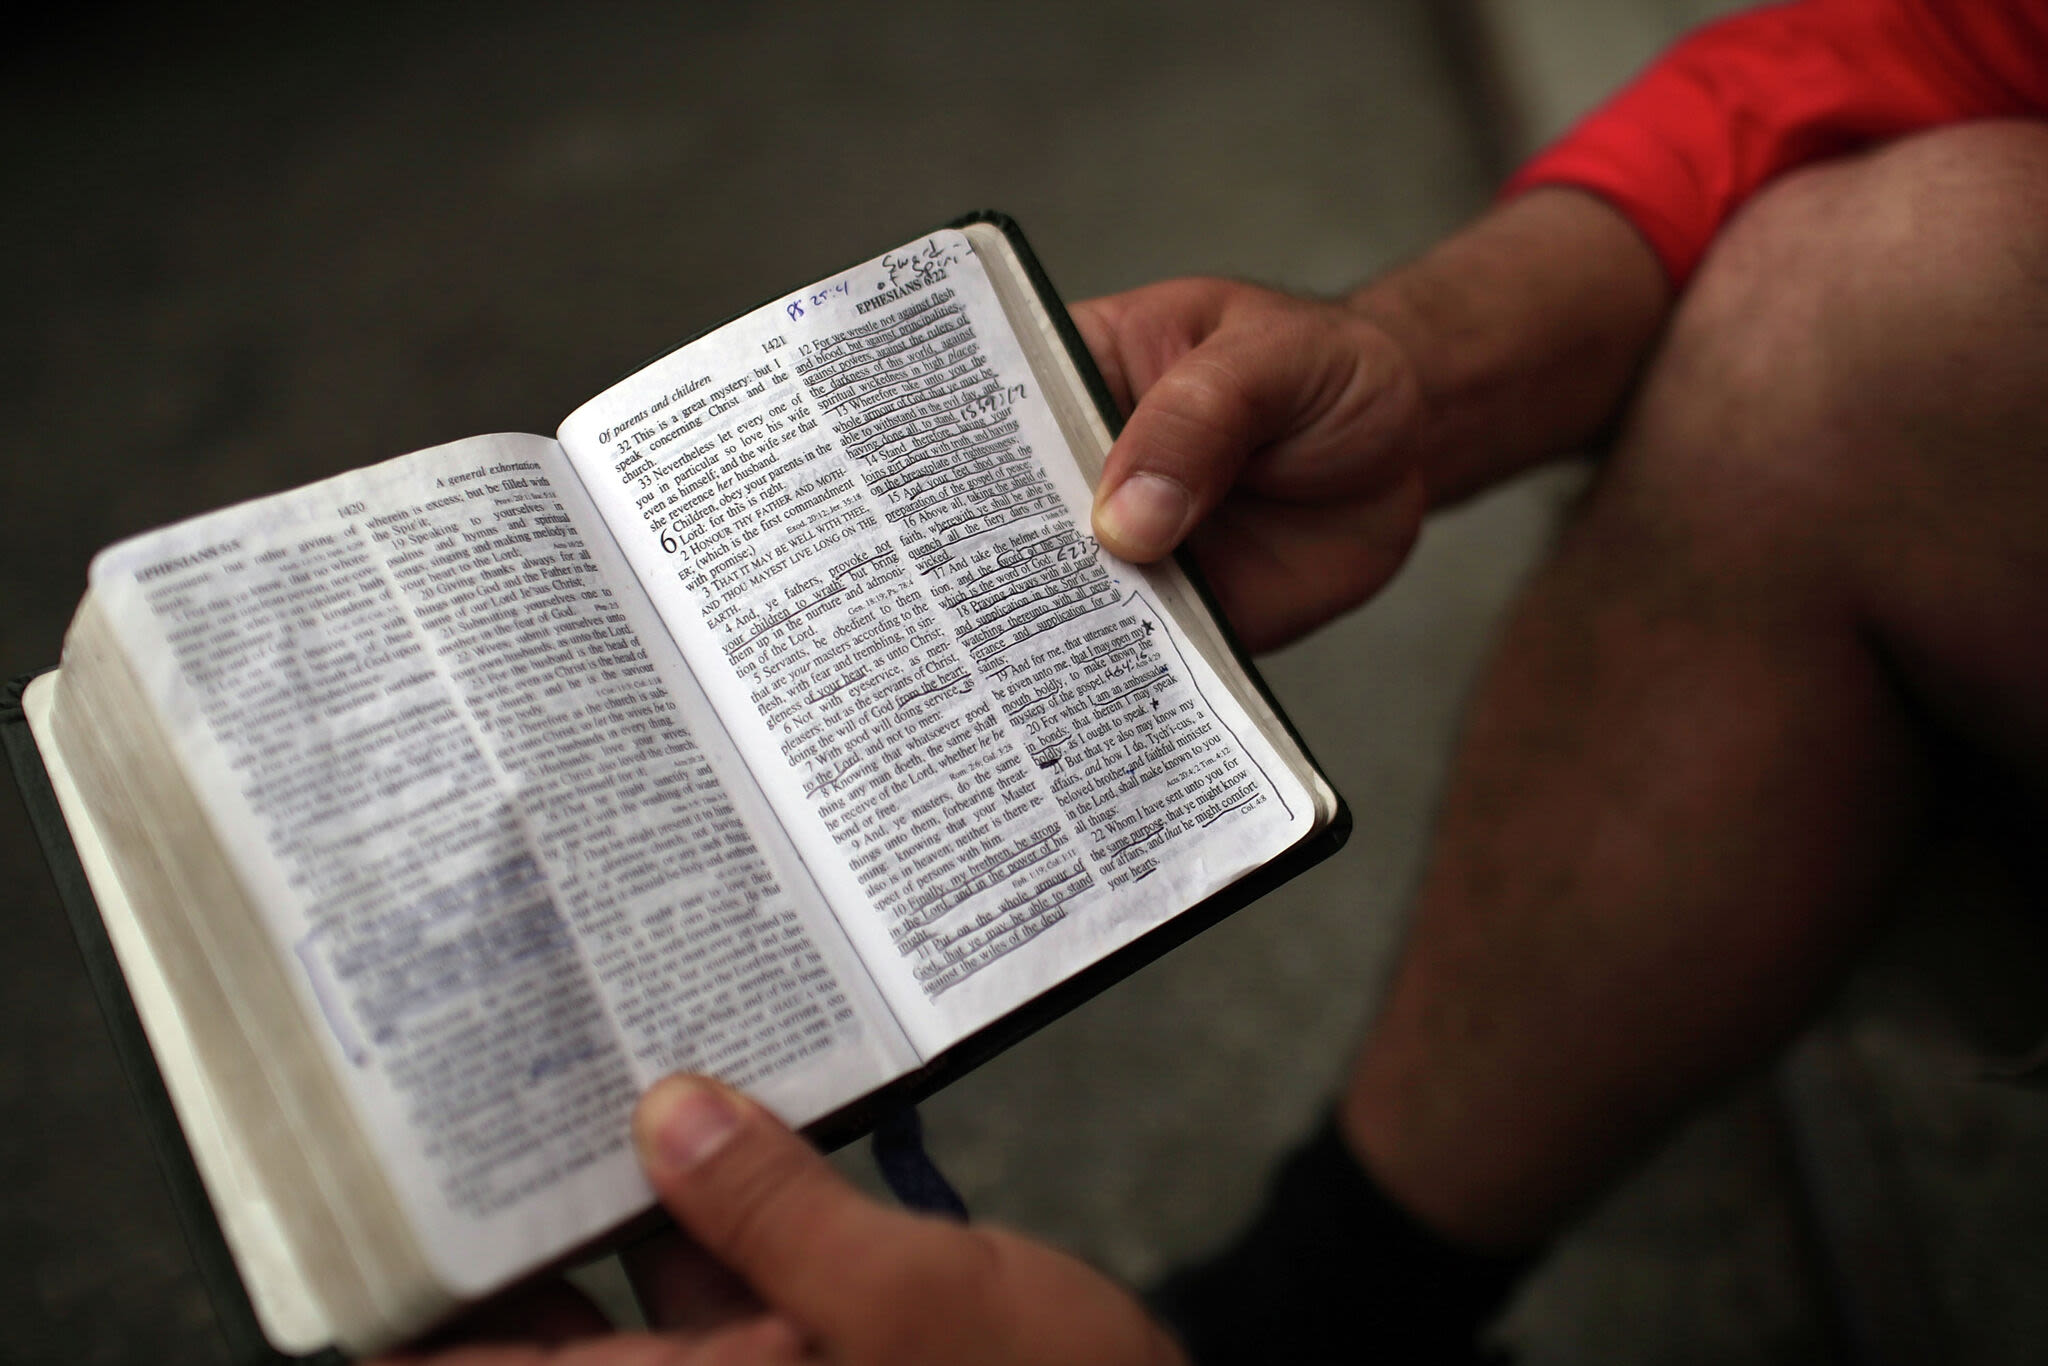 Texas GOP platform calls for mandatory Bible lessons in schools